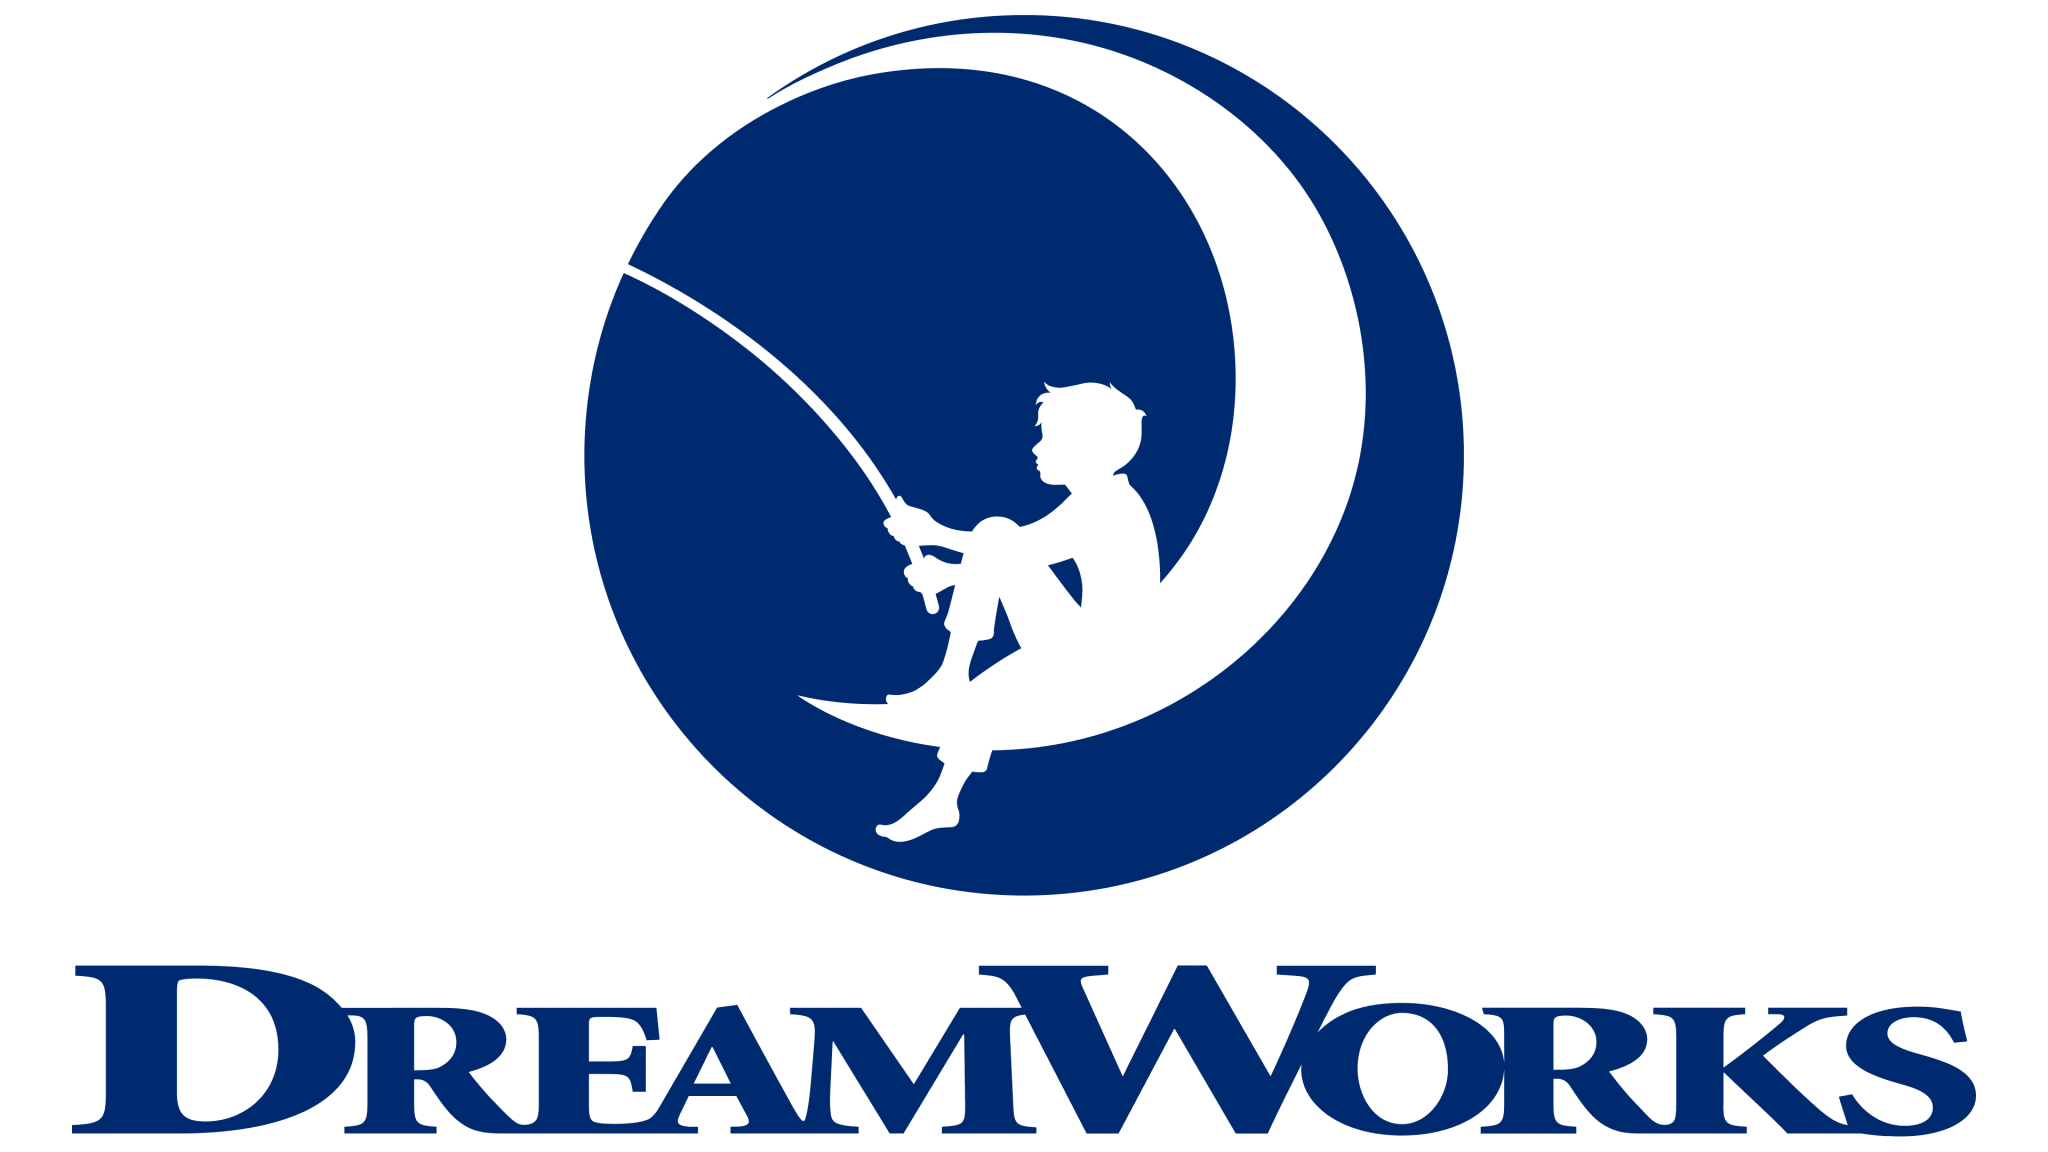 Dreamtwerkz DreamWorks Animation